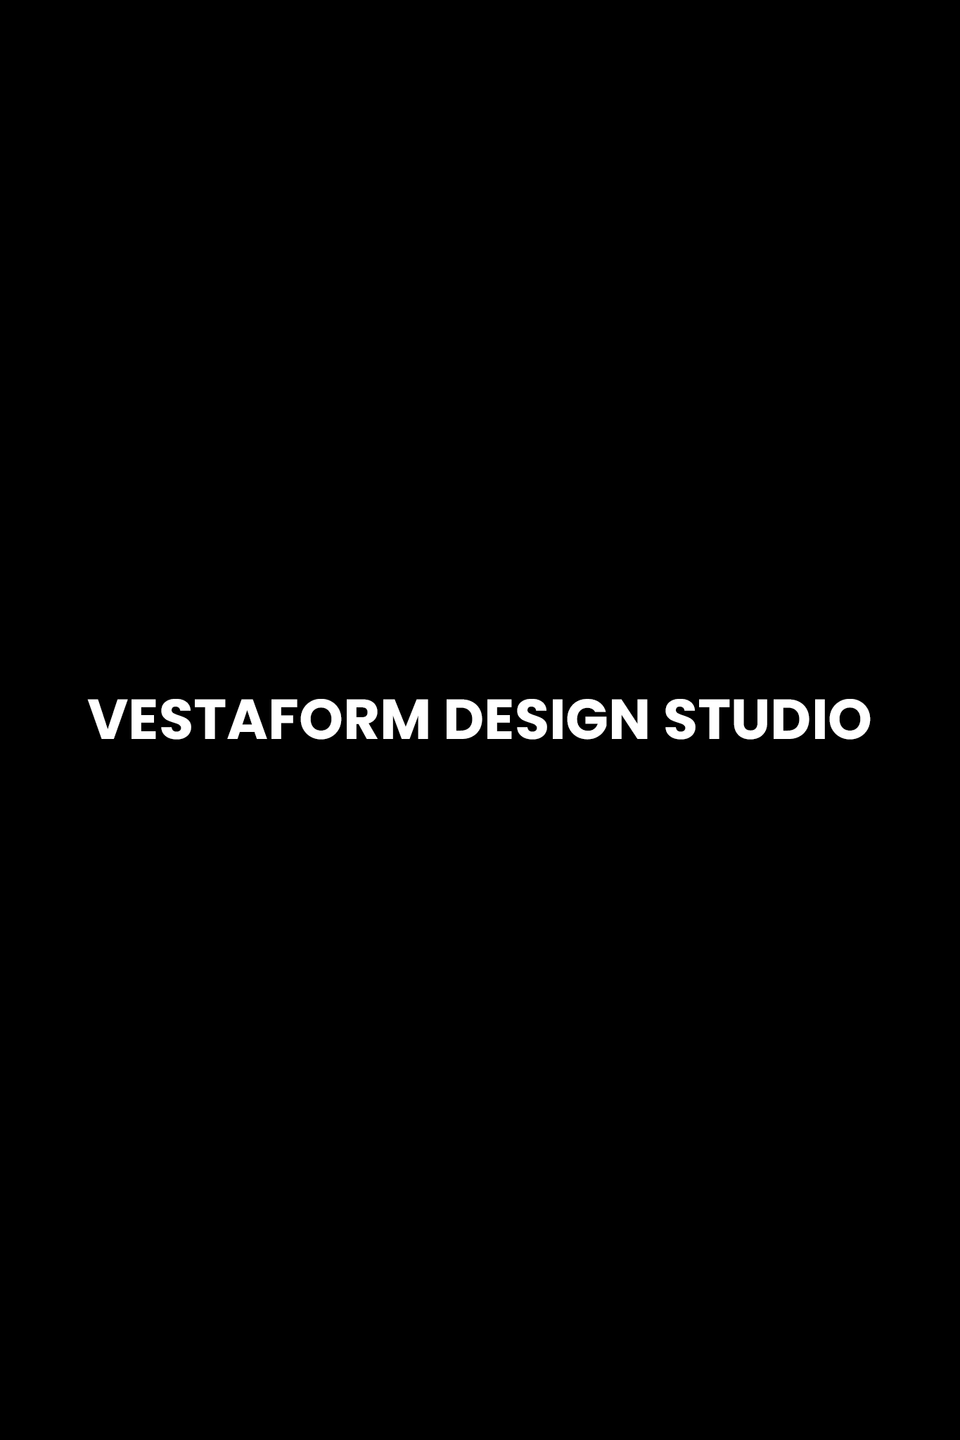 Vestaform Design Studio